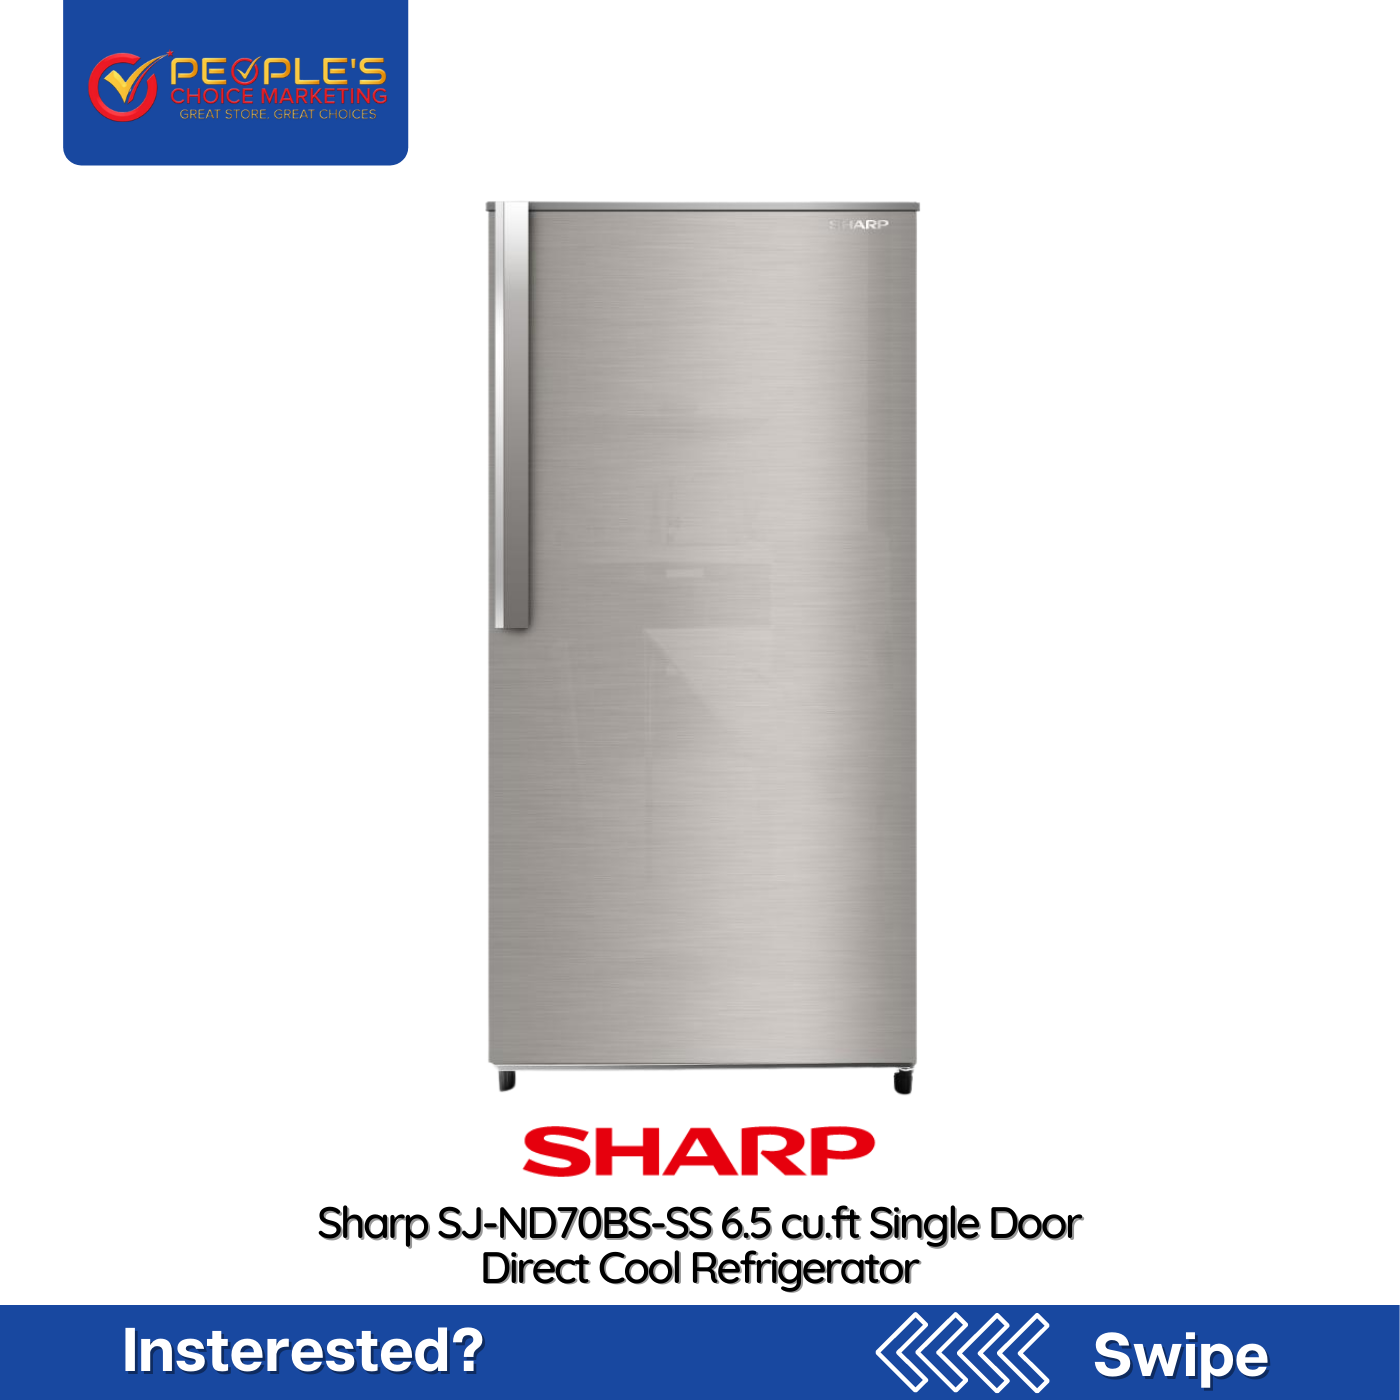 Sharp Refrigerator SJ-ND70BS-SS 6.5 cu.ft 1 door